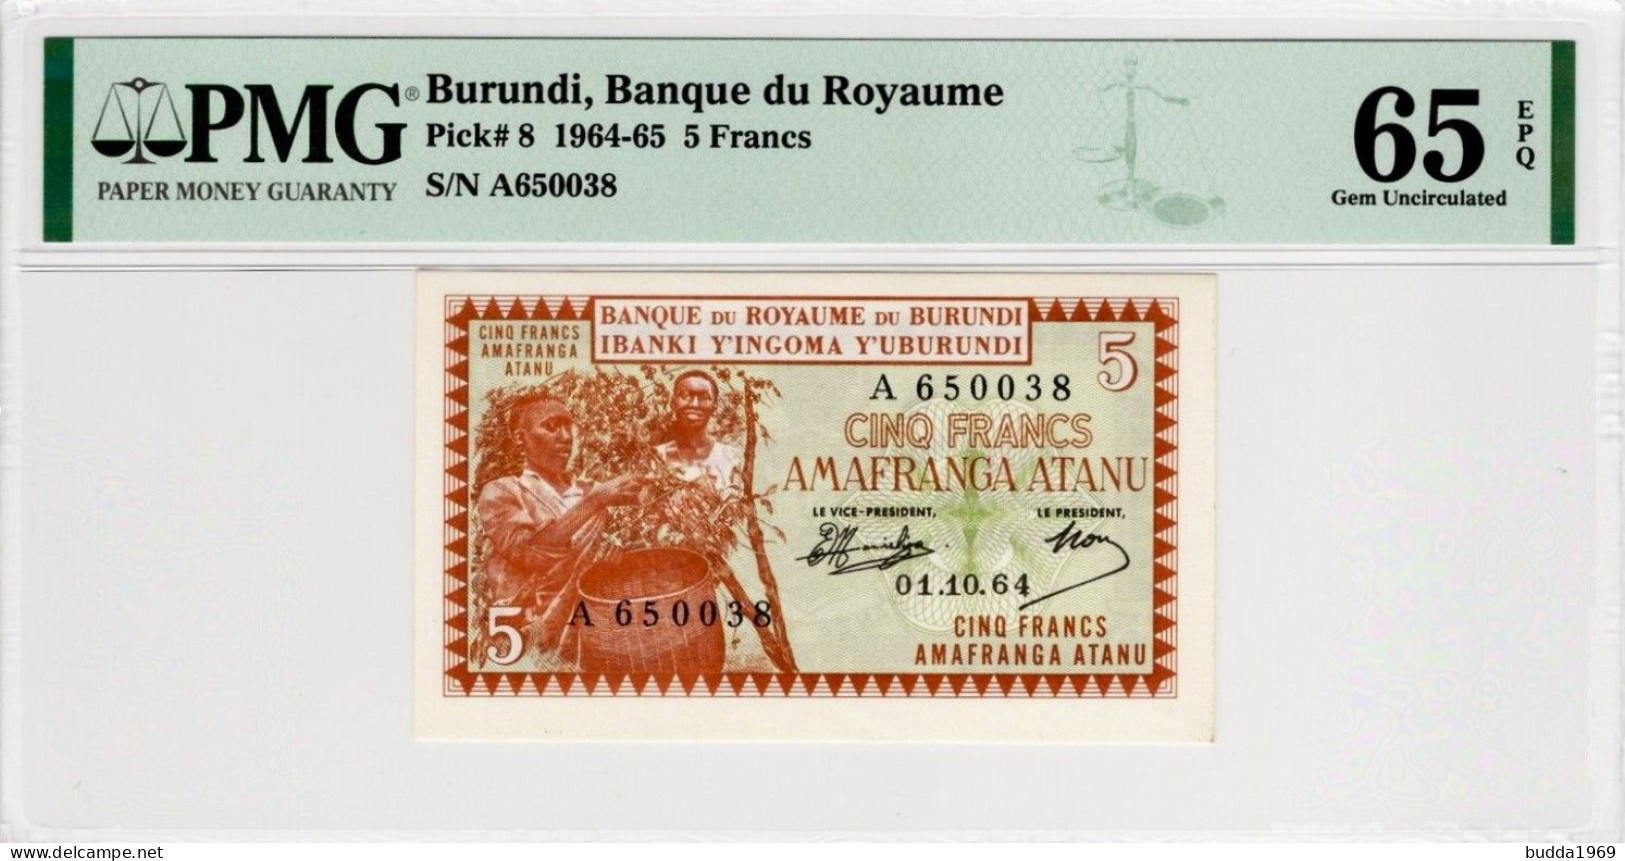 BURUNDI 1964 ,P8-5 FRANCS-PMG 65 - VERY RARE! - Burundi